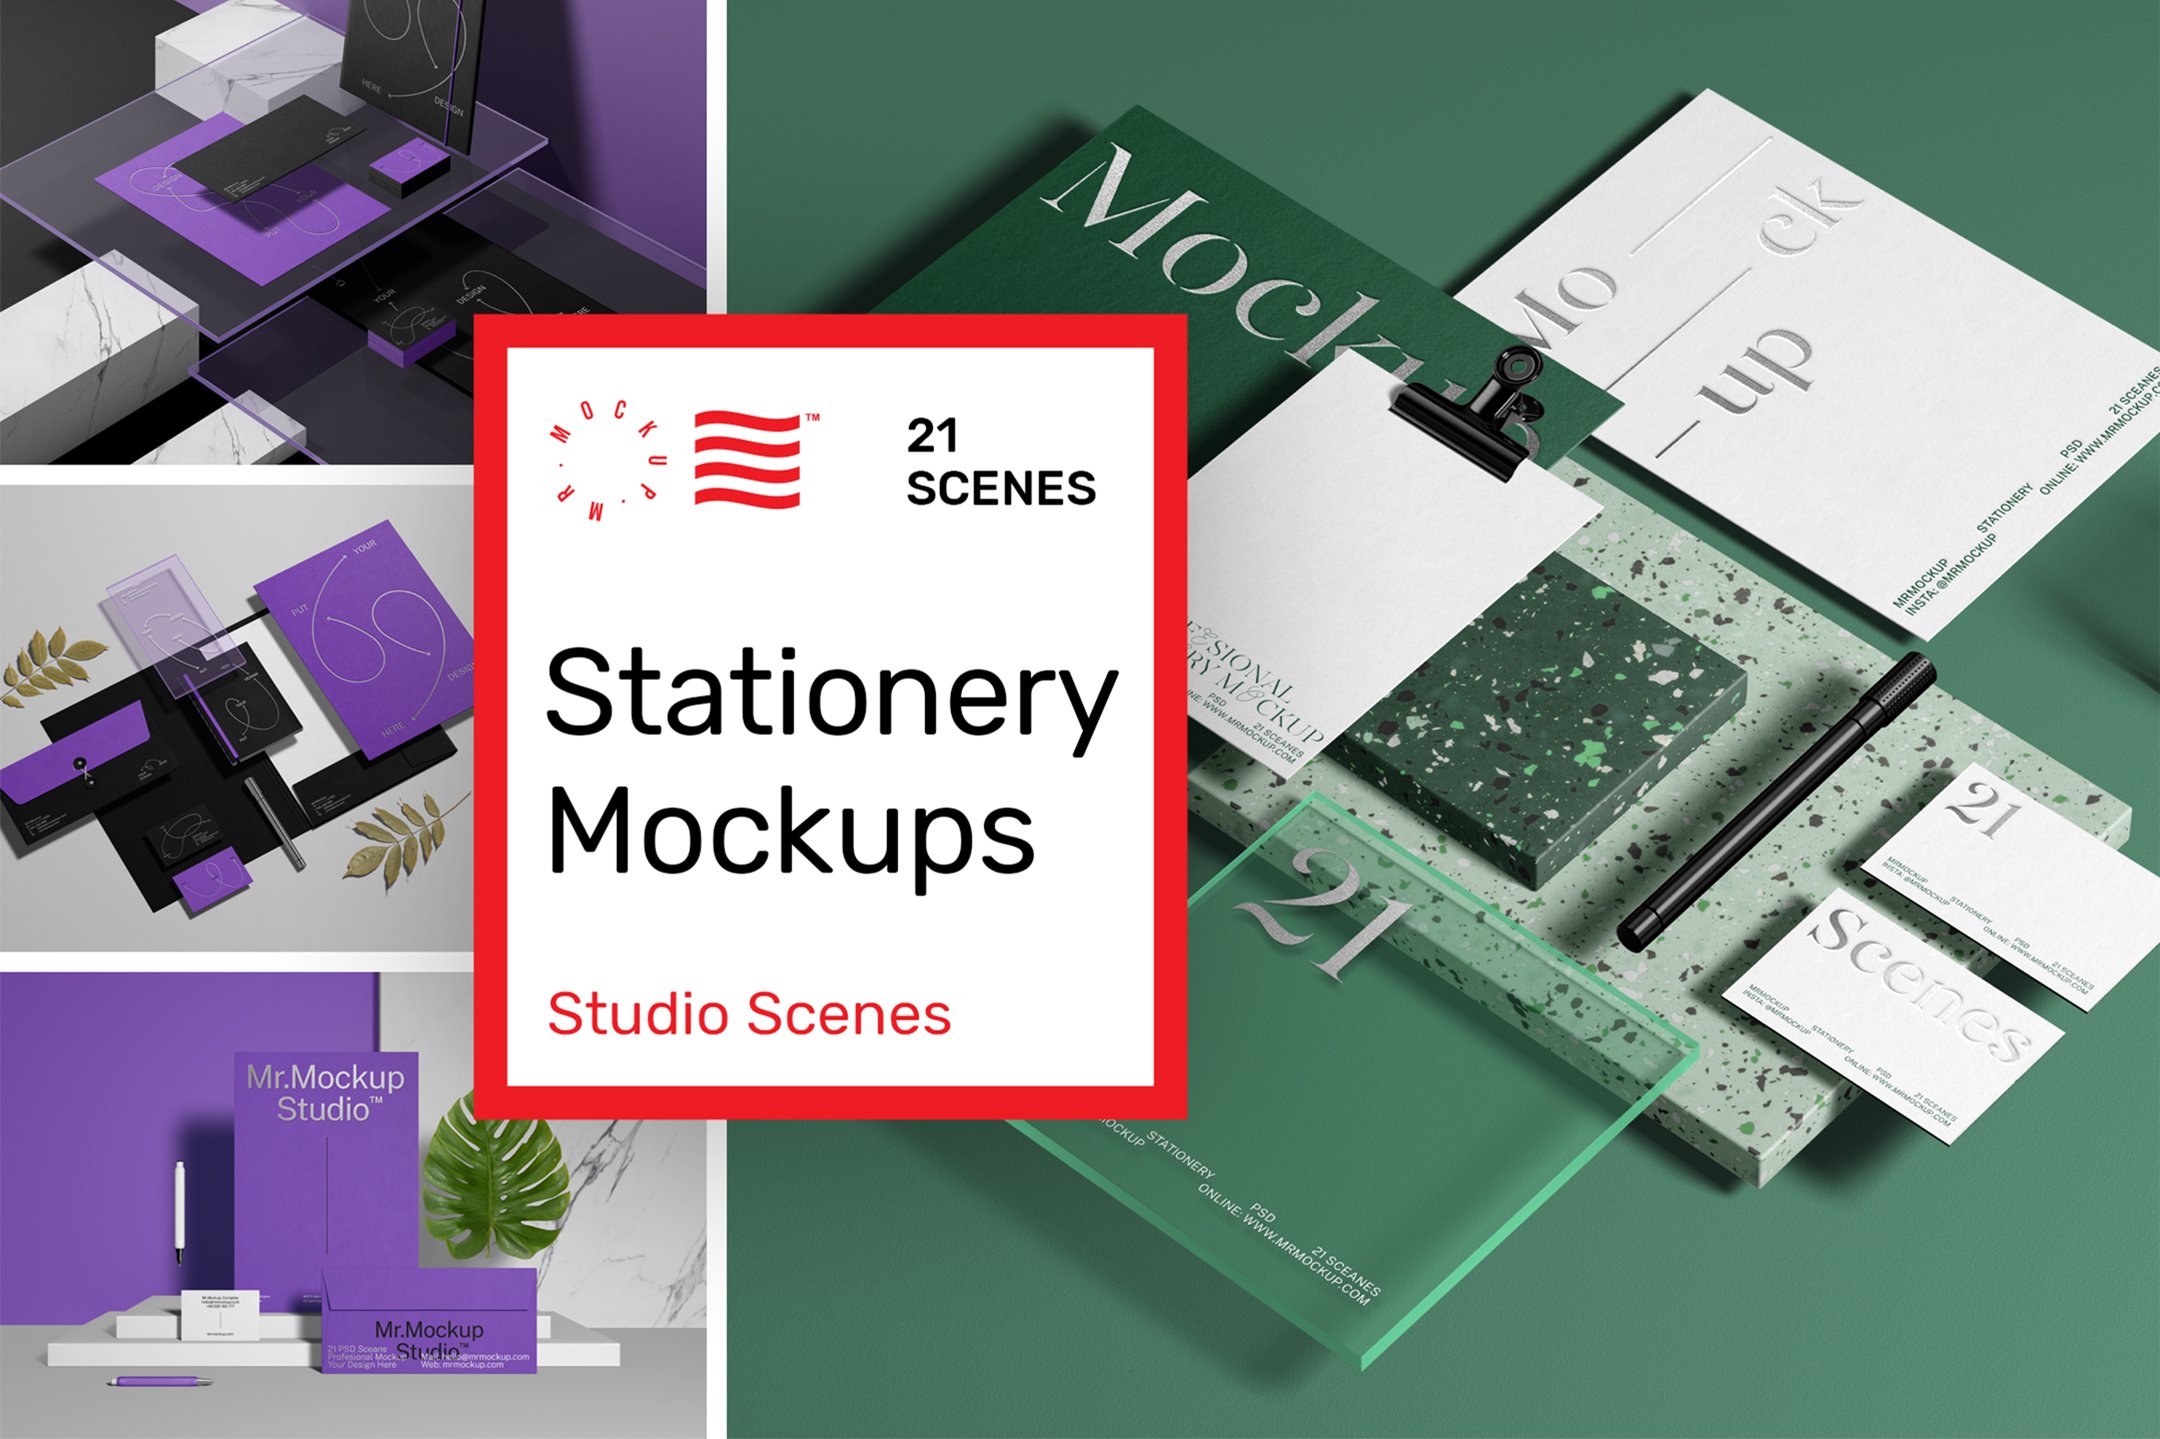 Stationery Mockups - Studio Scenes cover image.